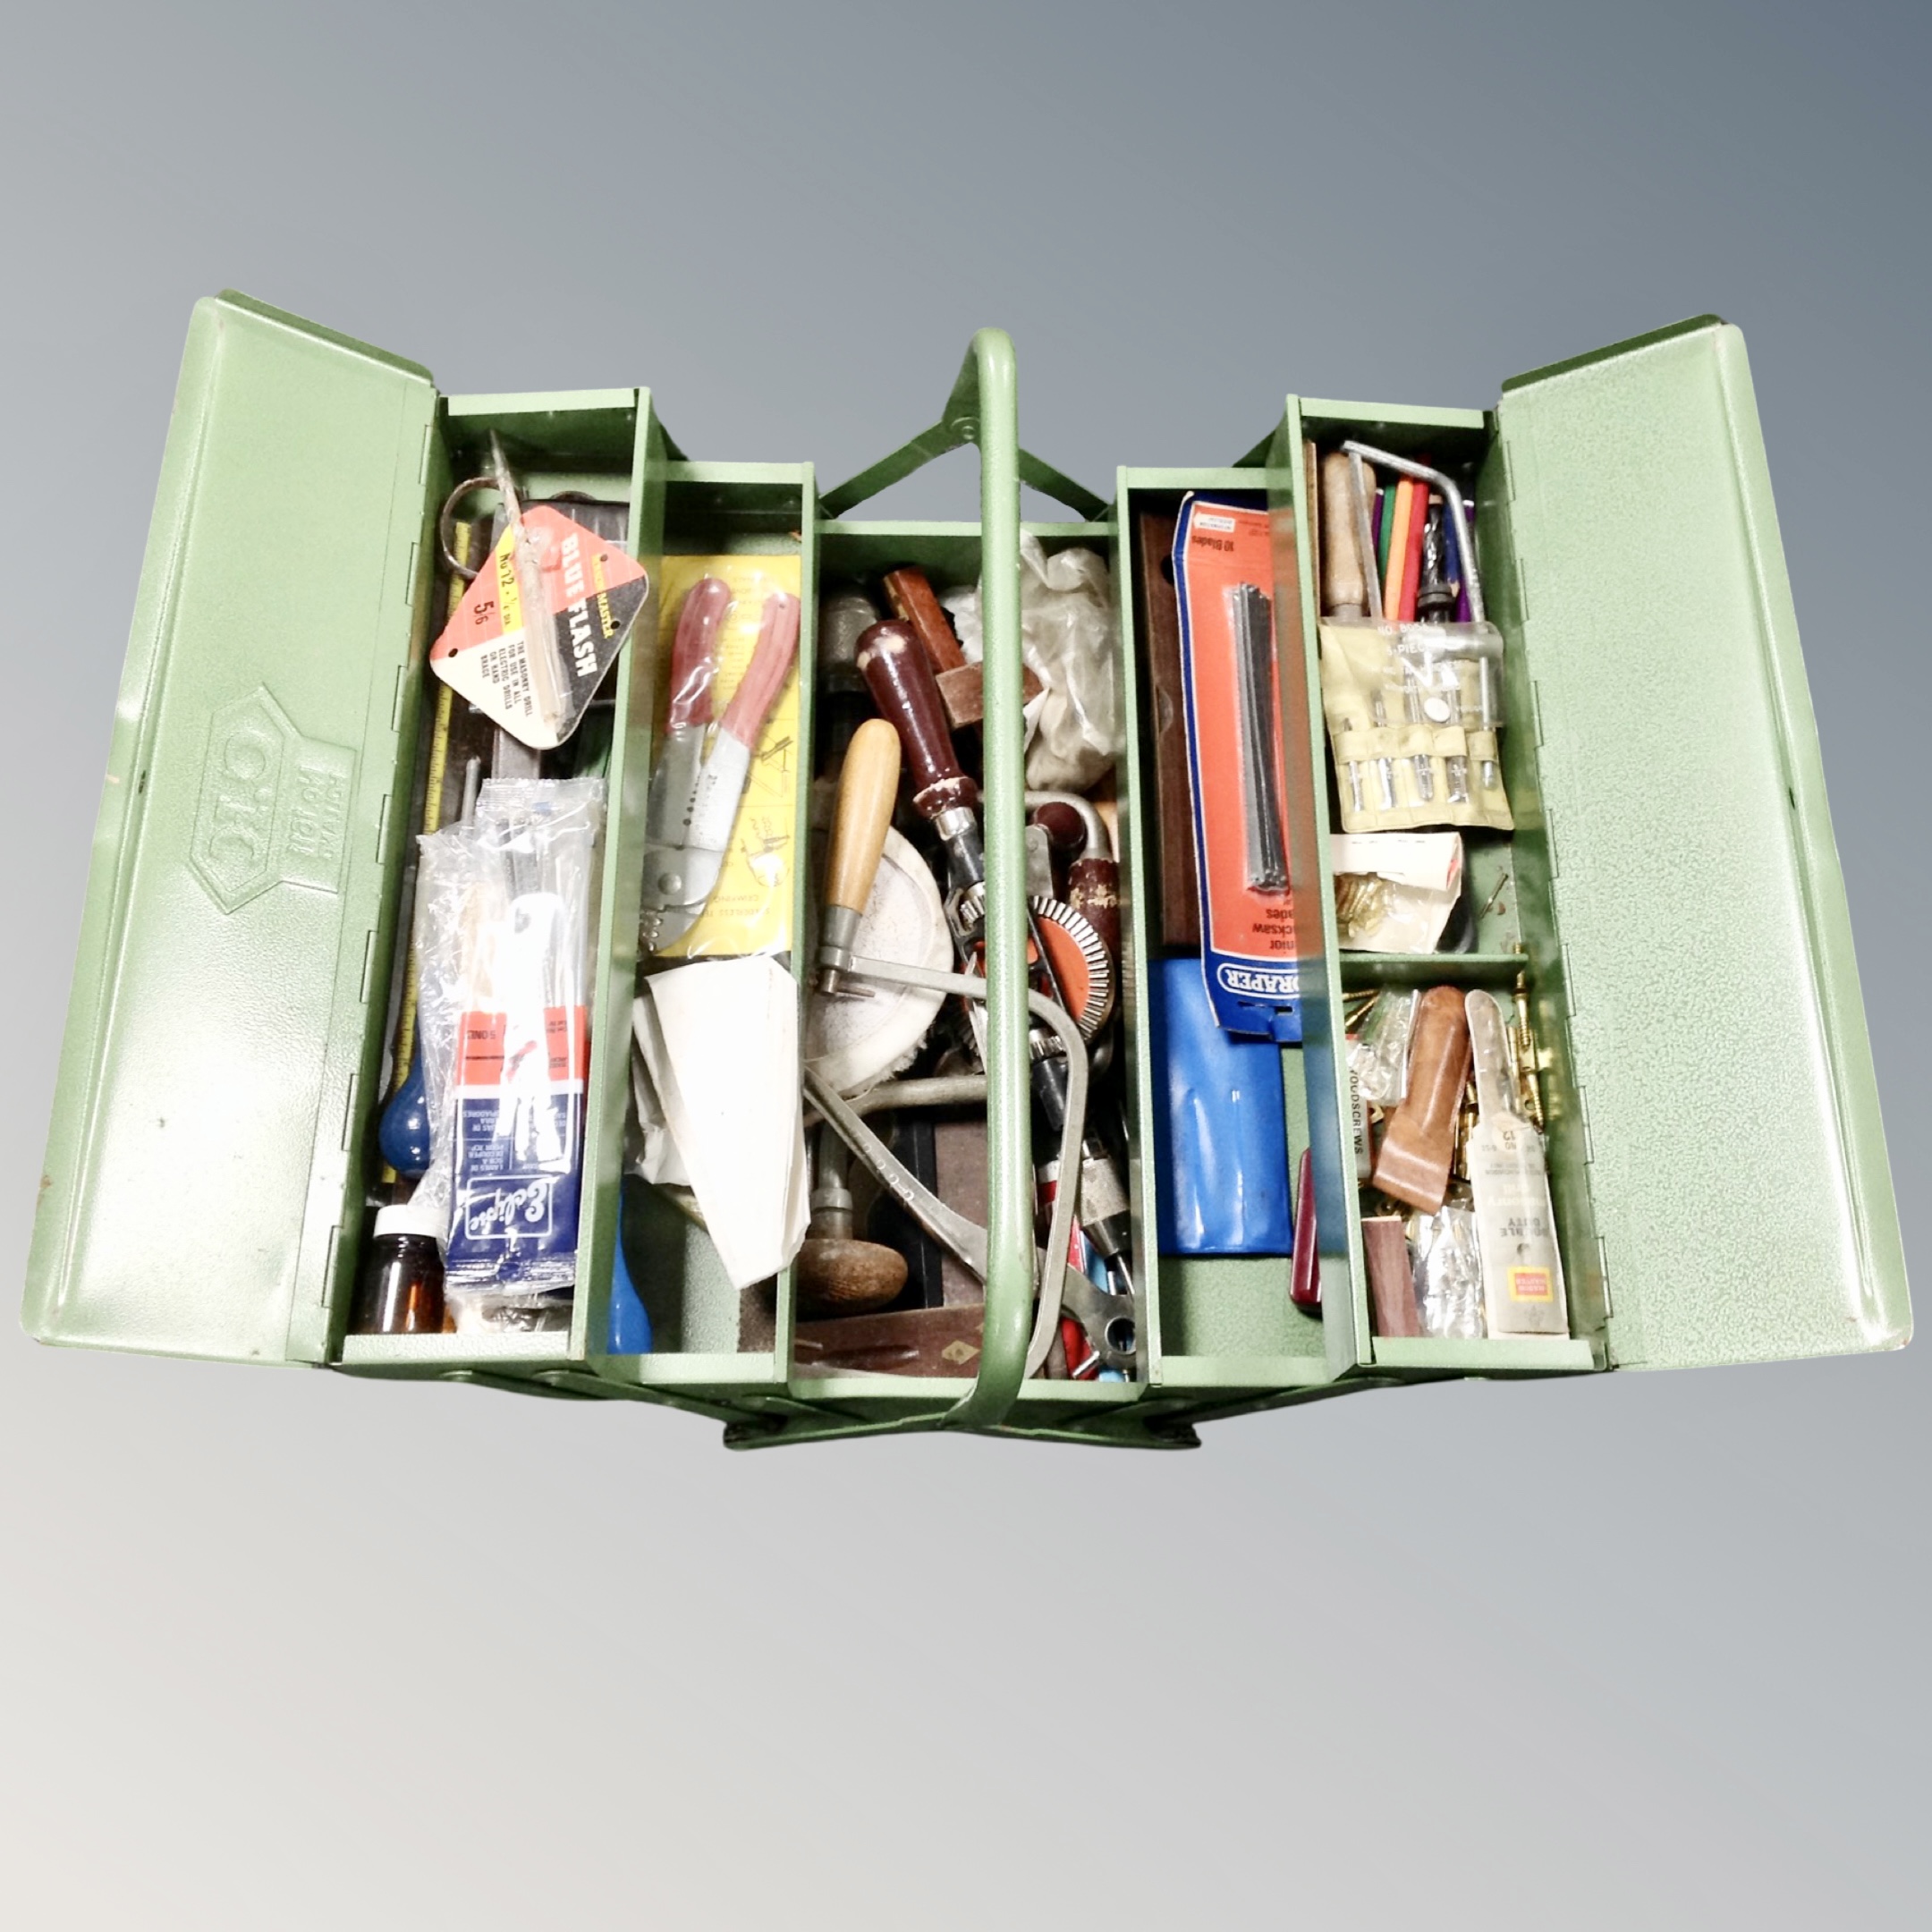 A metal concertina tool box containing hand tools